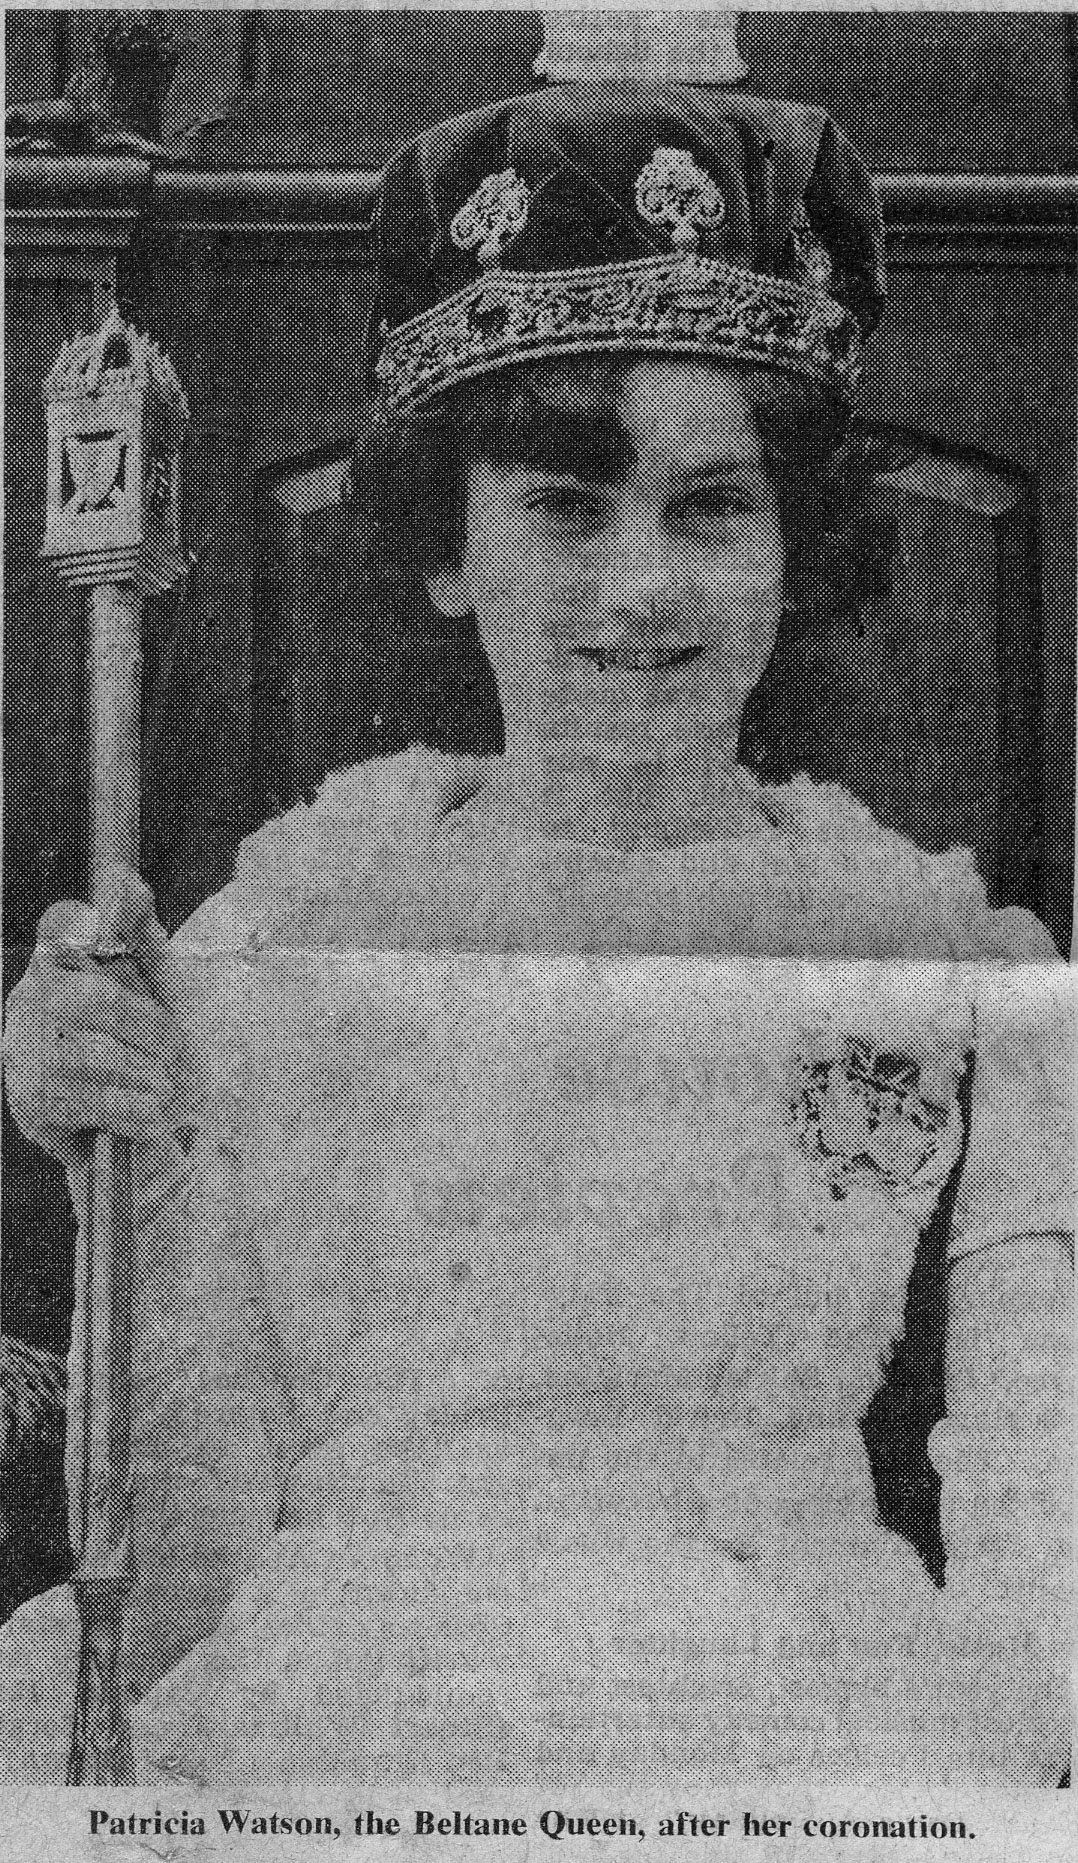 Patricia Watson, the Beltane Queen